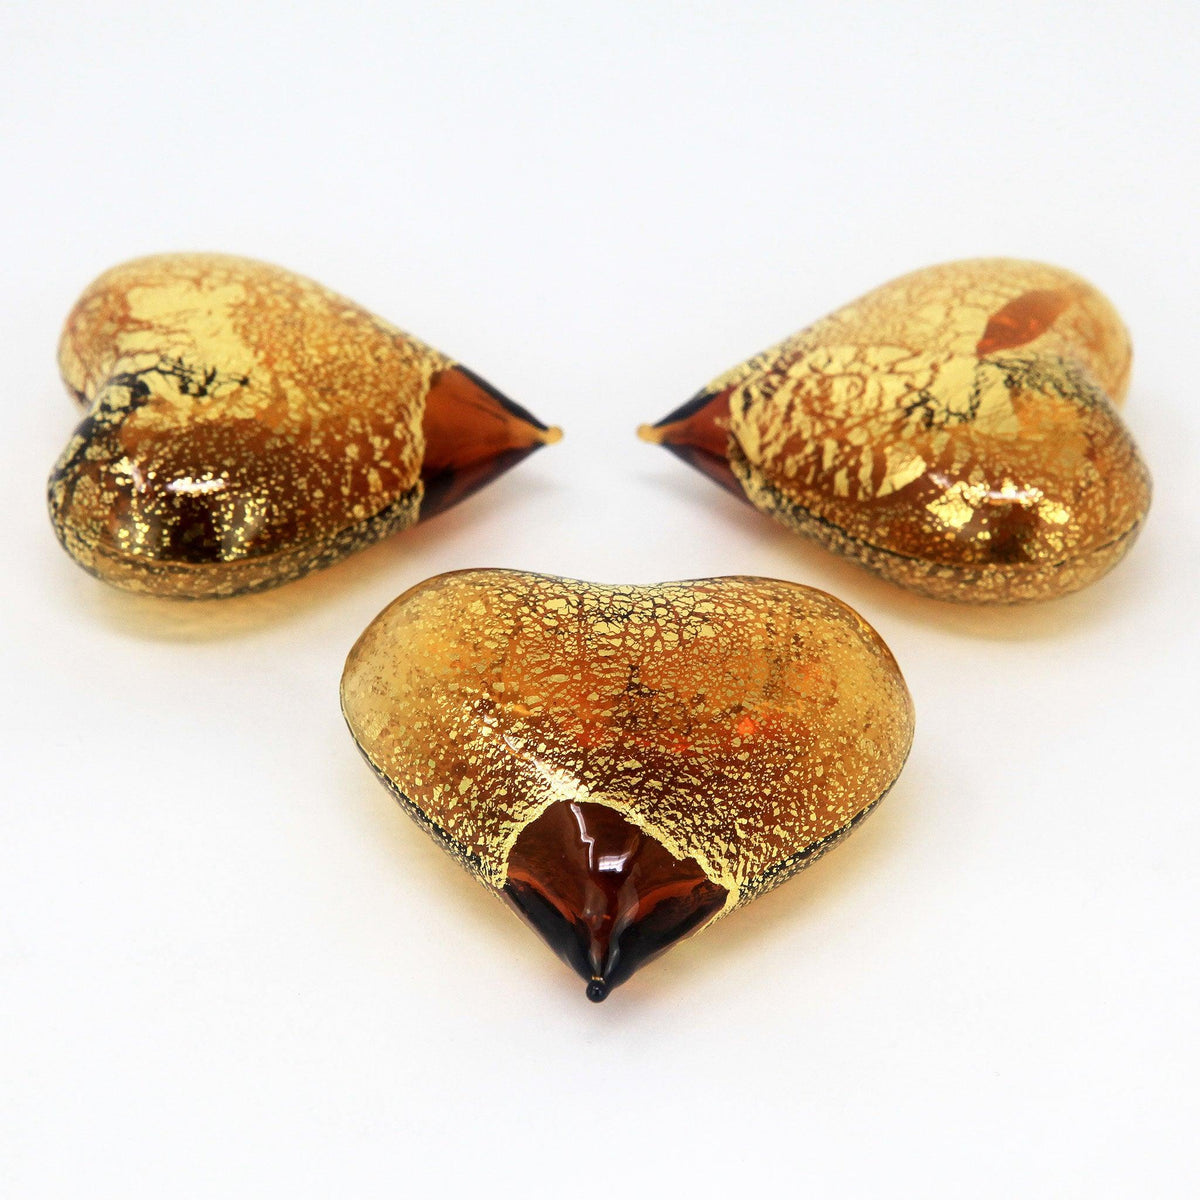 Small Blown Glass Hearts, Set of 3, Made in Murano, Italy - MyItalianDecor